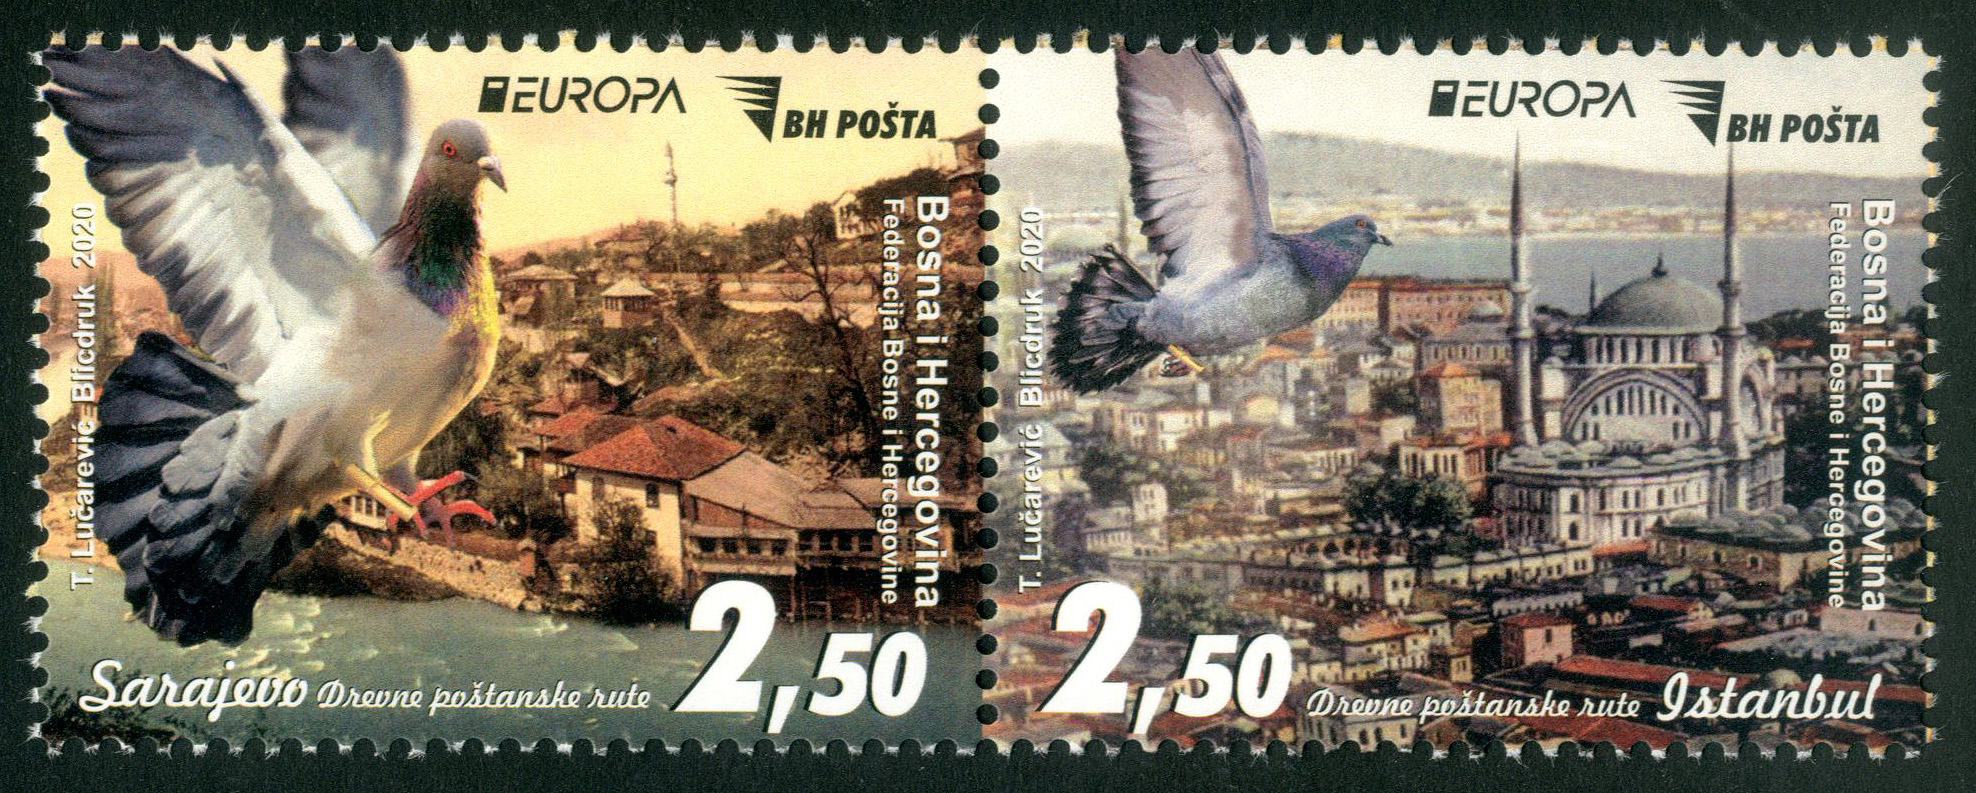 europa-2020---ancient-postal-routes-series